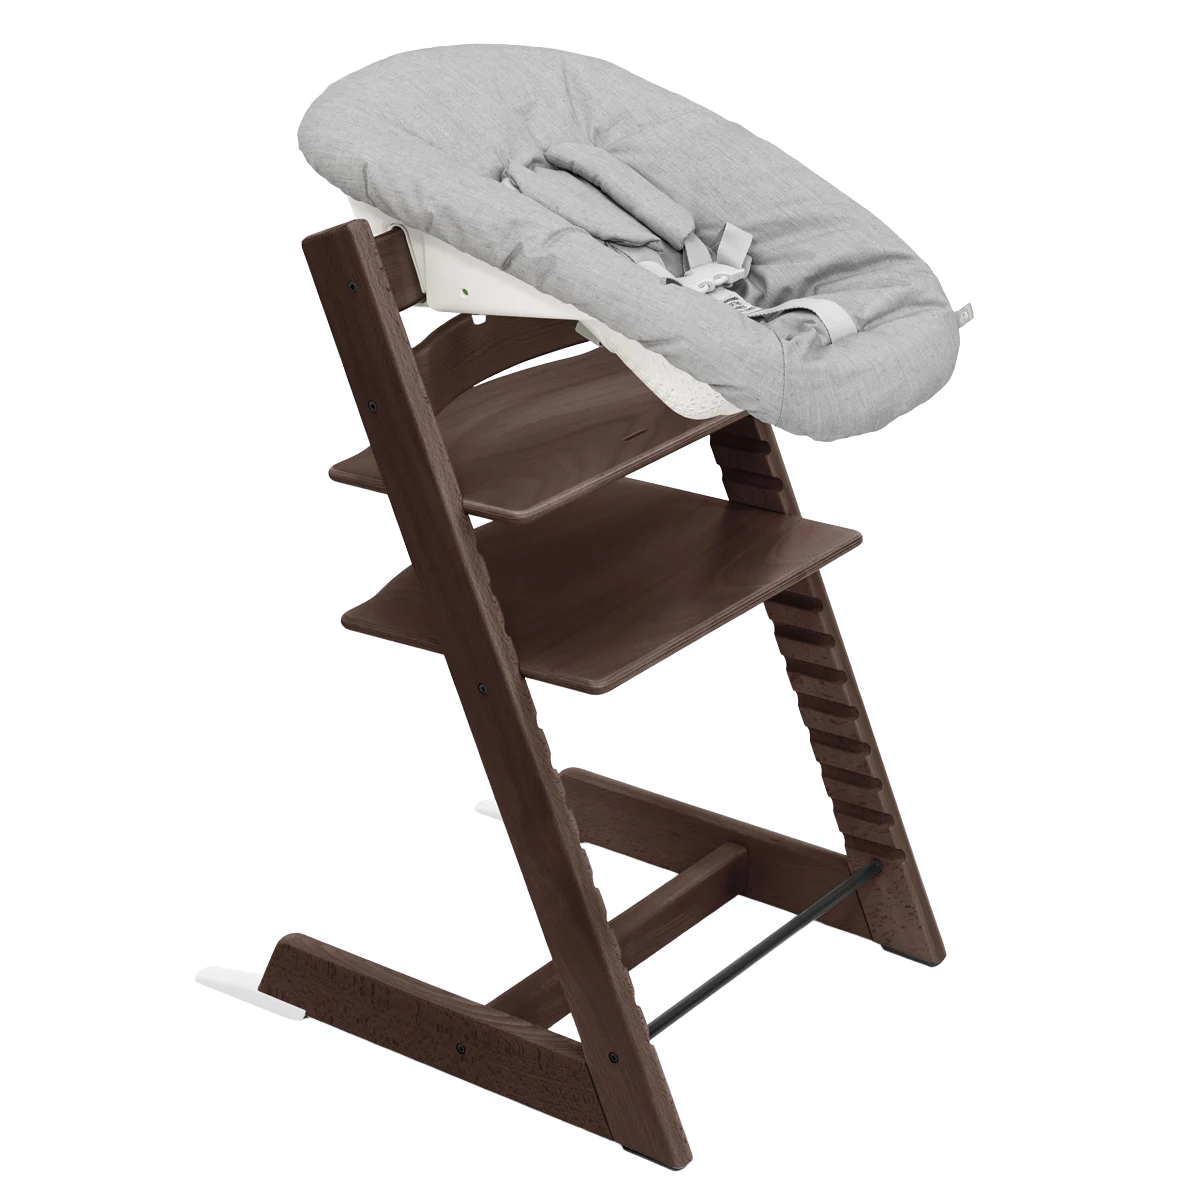 Набор Stokke Newborn Tripp Trapp Walnut Brown: стульчик и кресло для новорожденных (k.100106.52) - фото 1